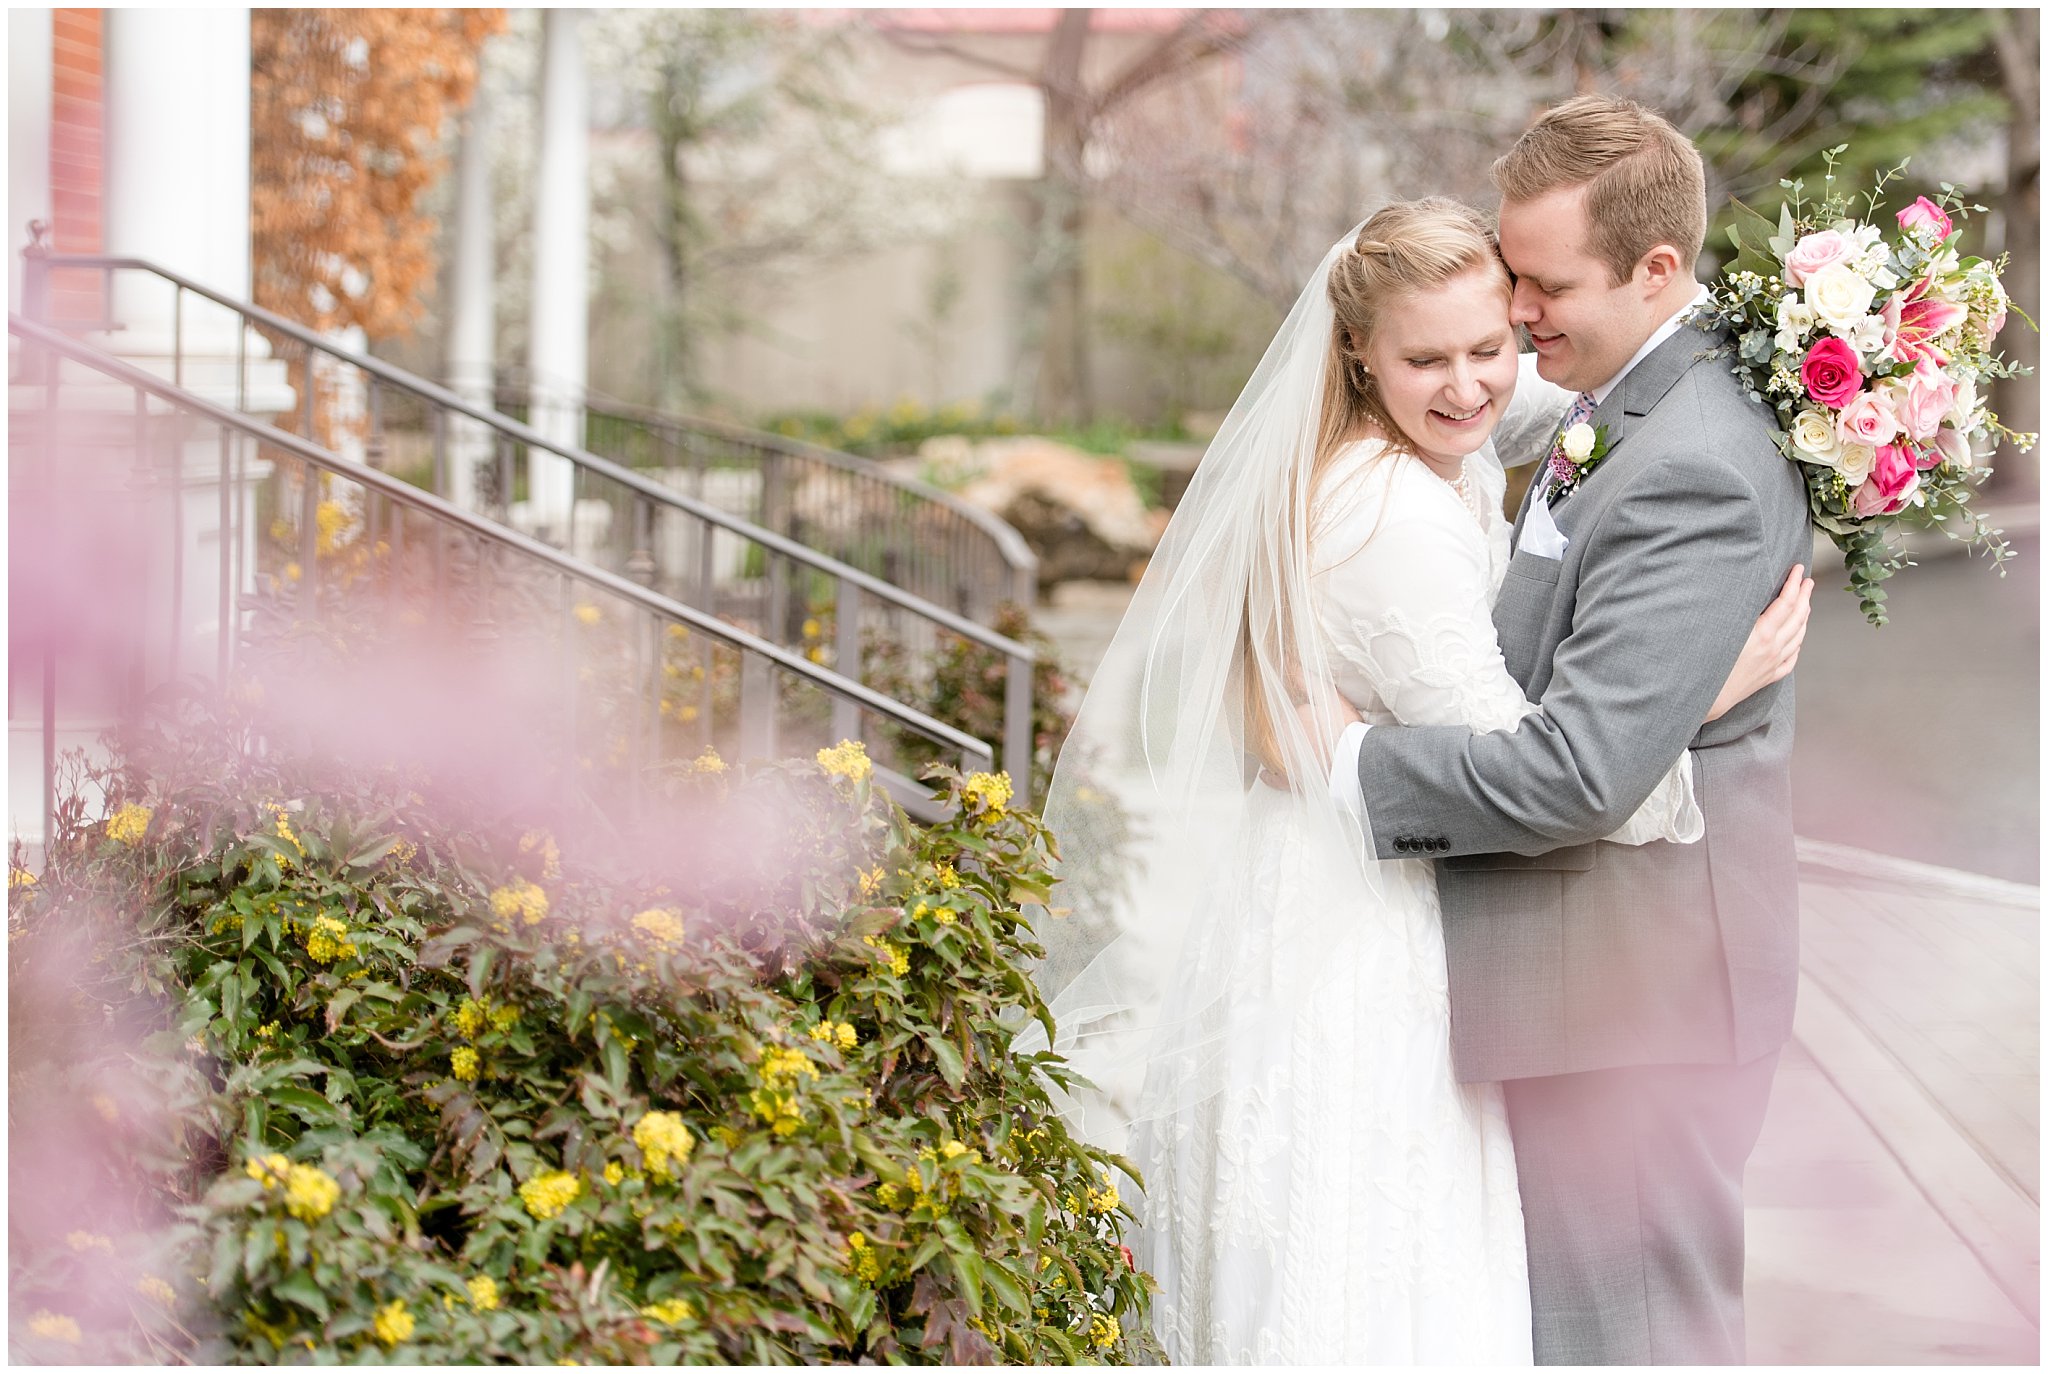 Eldrege Manor wedding reception | Spring Utah Wedding | Candid bride and groom photography